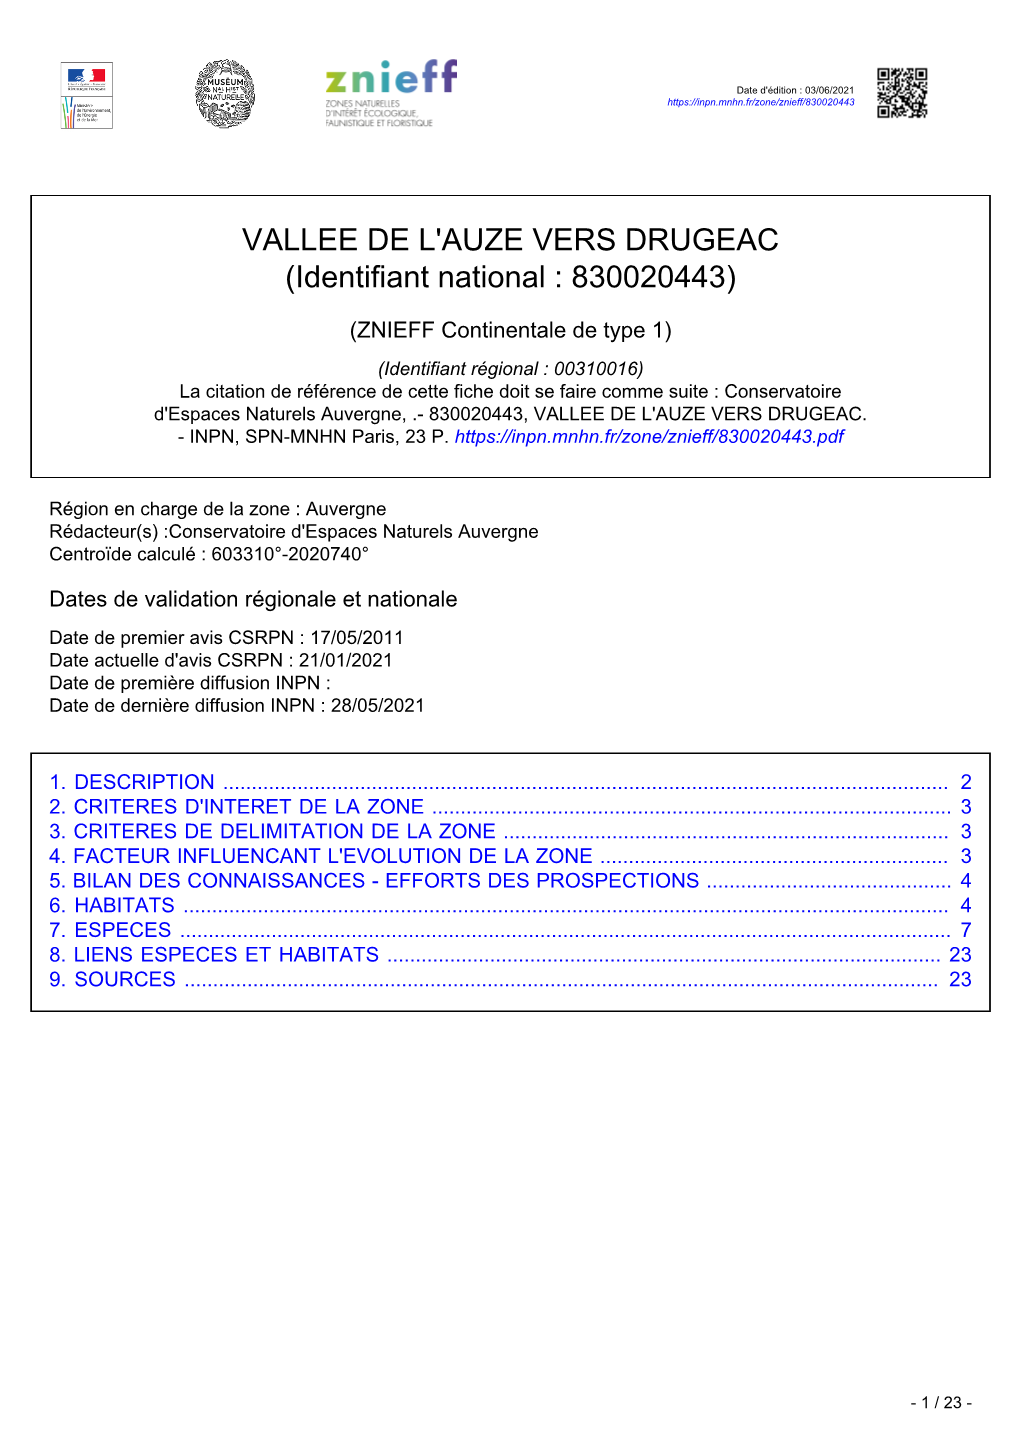 VALLEE DE L'auze VERS DRUGEAC (Identifiant National : 830020443)